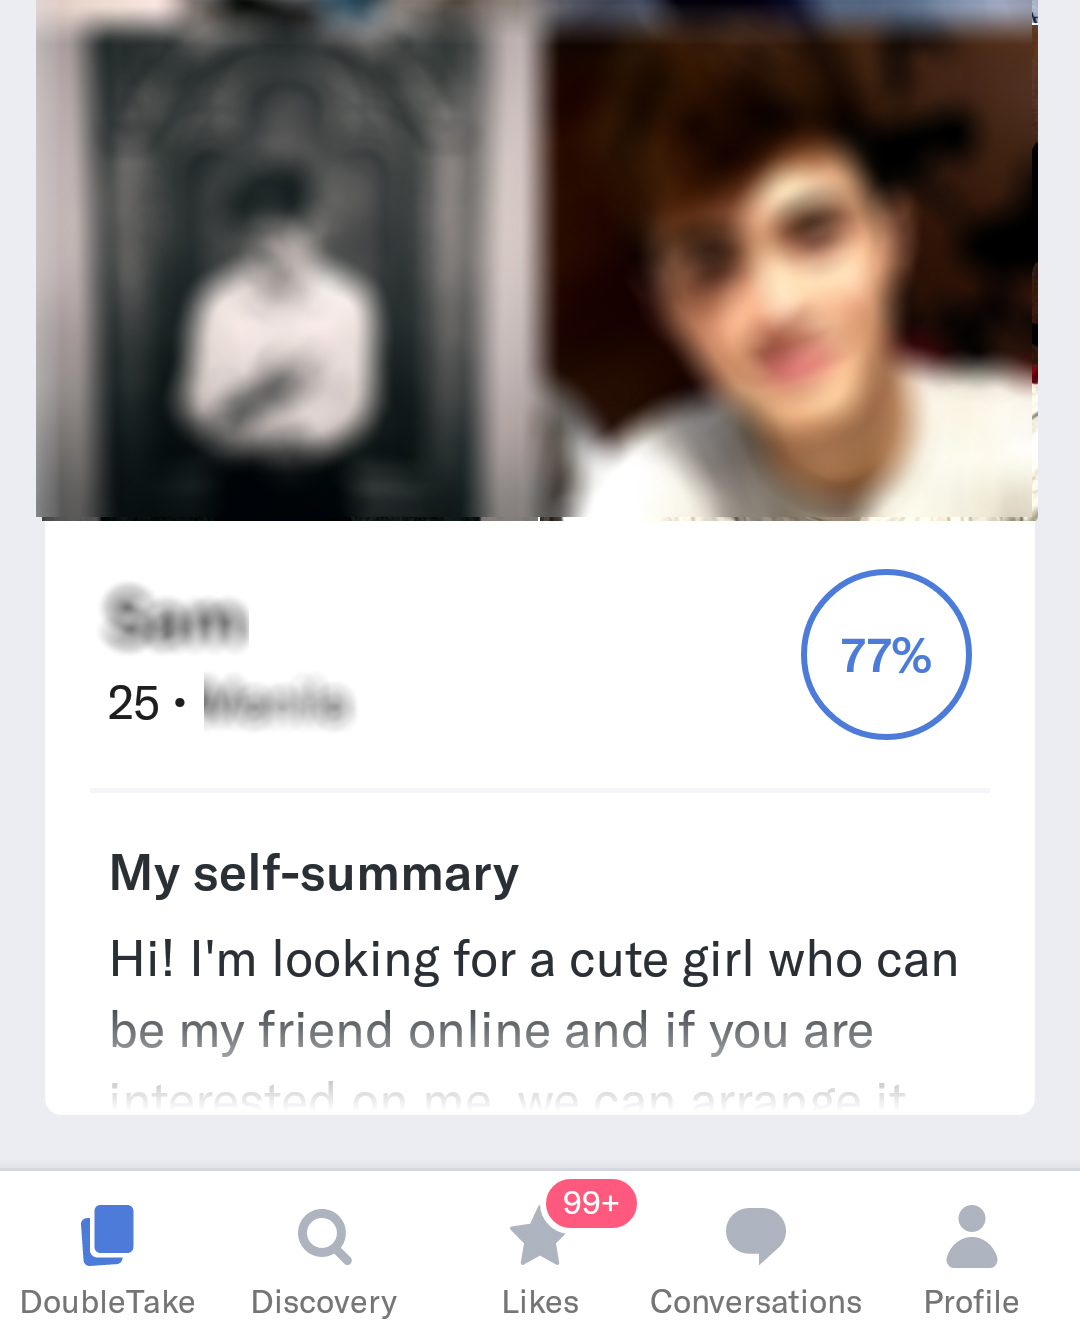 The art of conversation on OkCupid